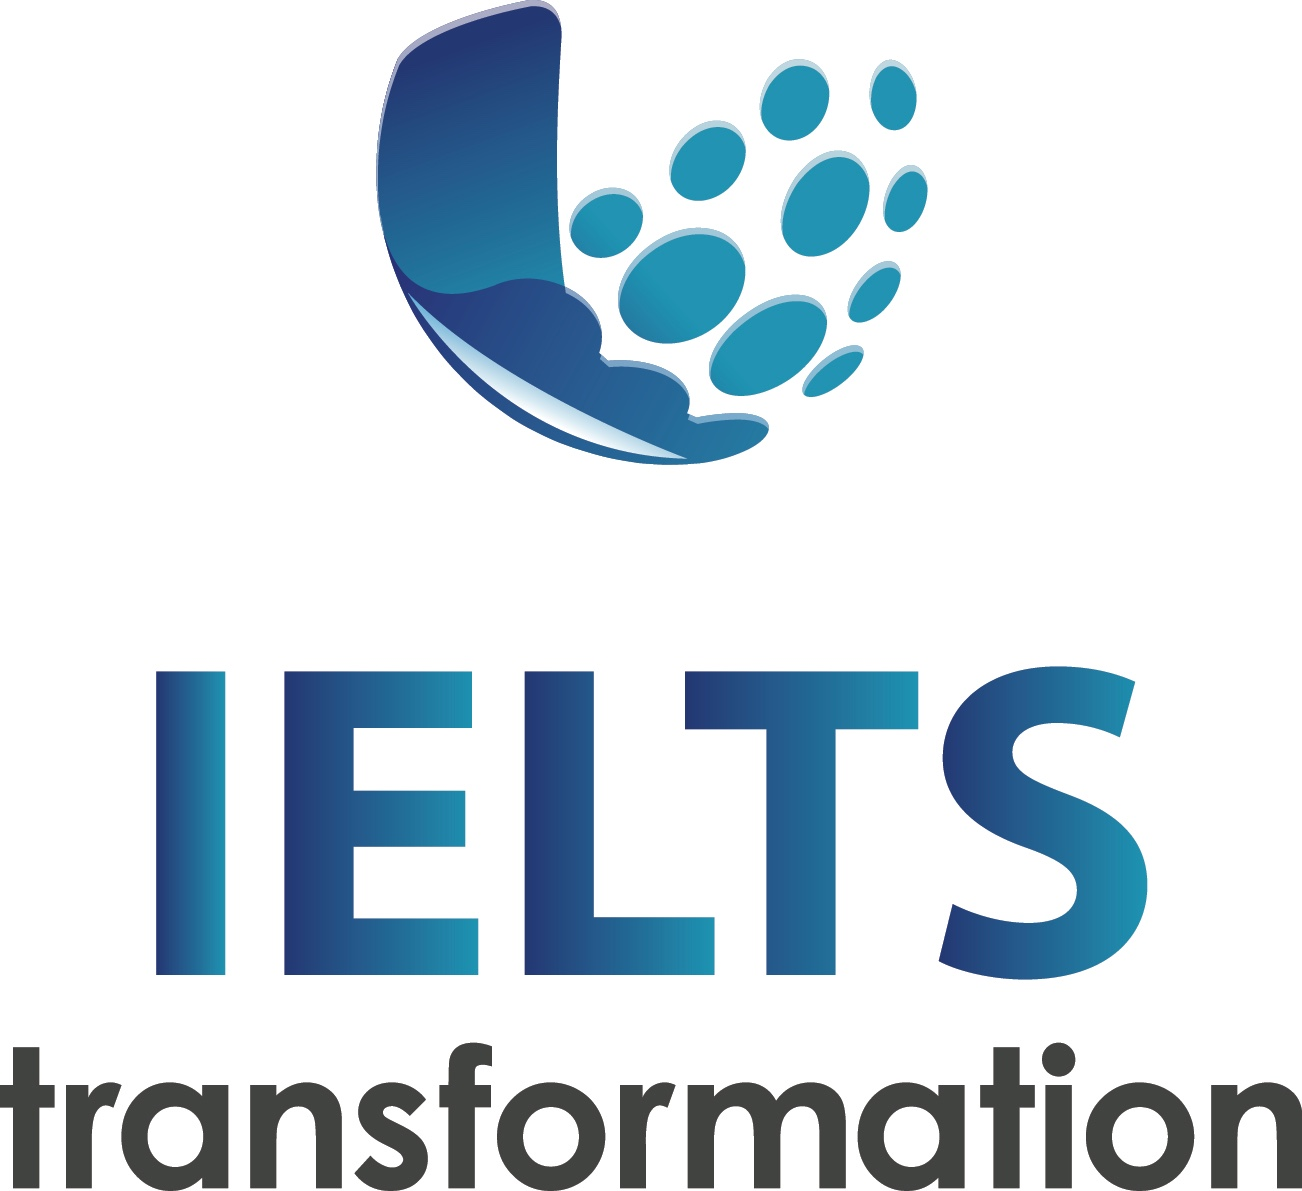 IELTS Transformation